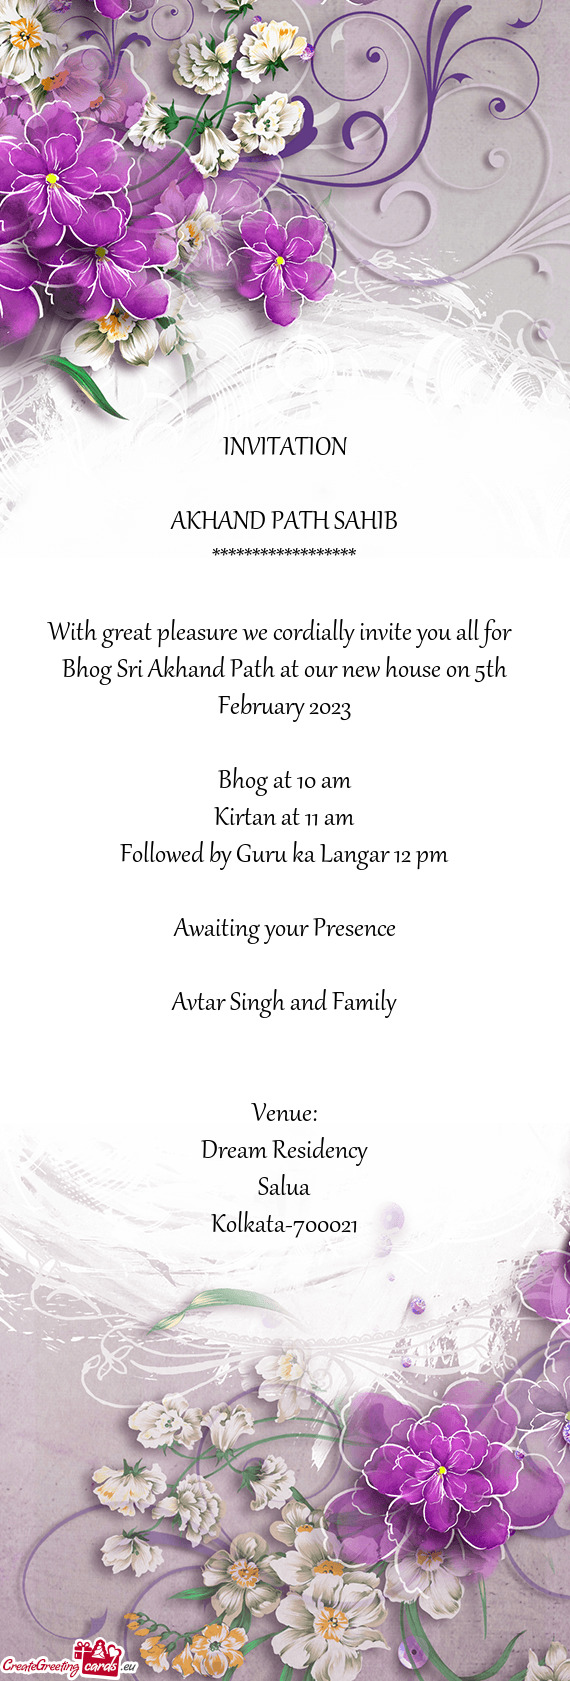 Bhog Sri Akhand Path at our new house on 5th February 2023